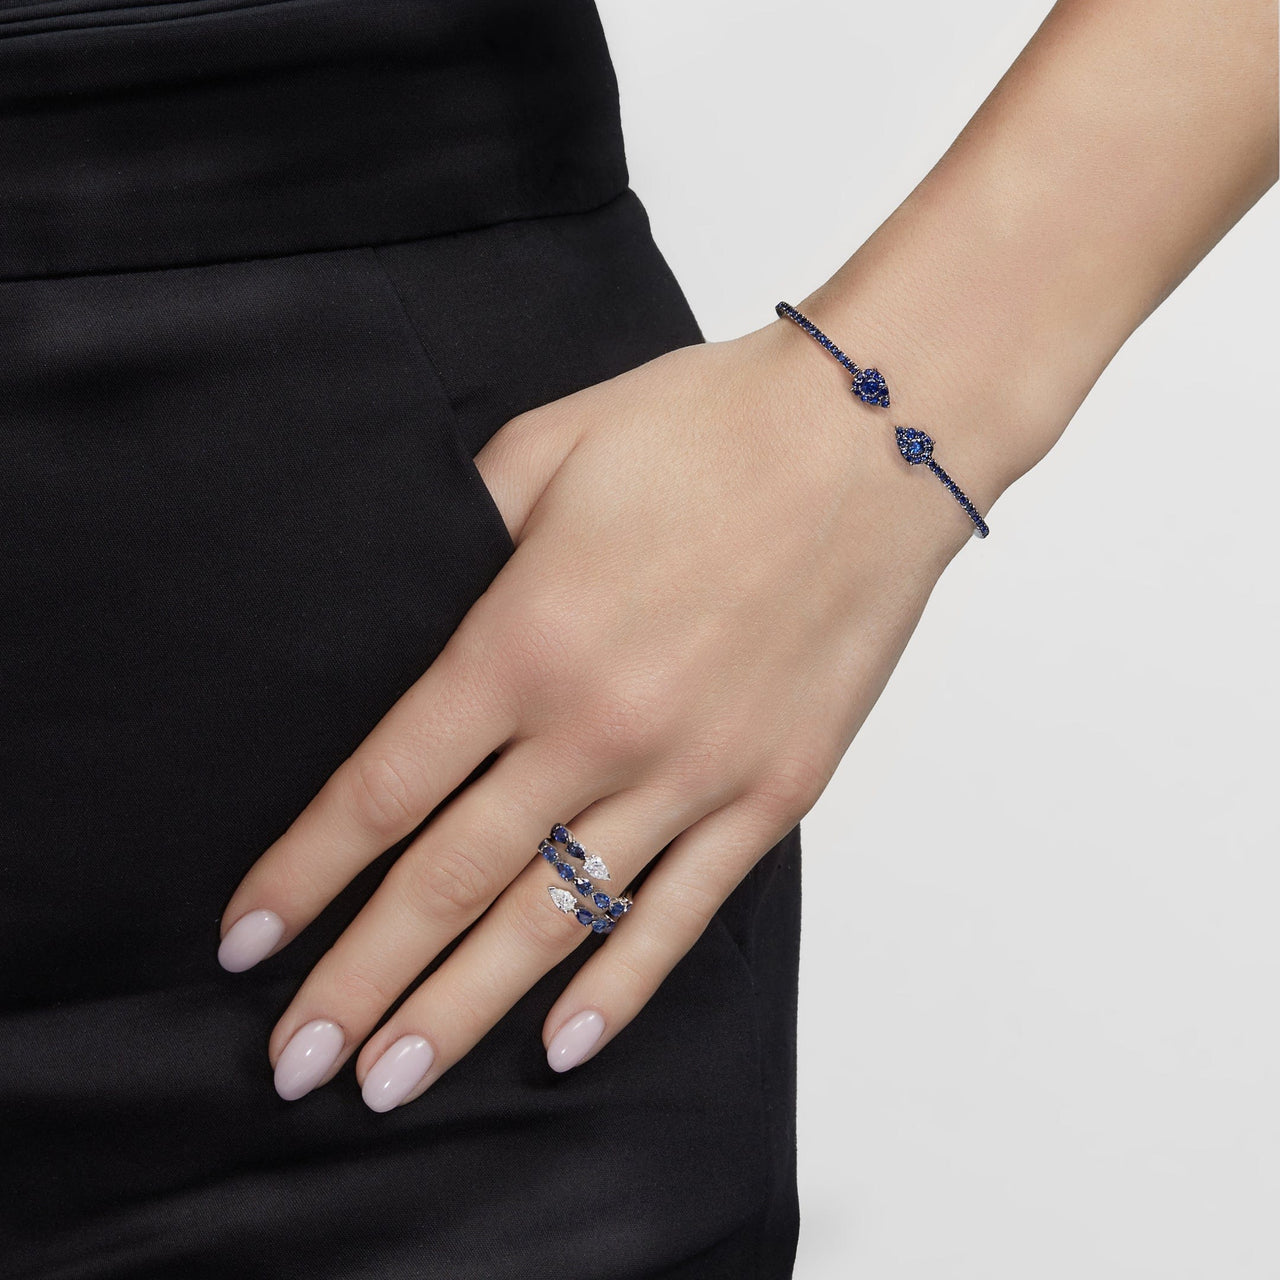 Blue Sapphire Flexible Cuff Bracelet